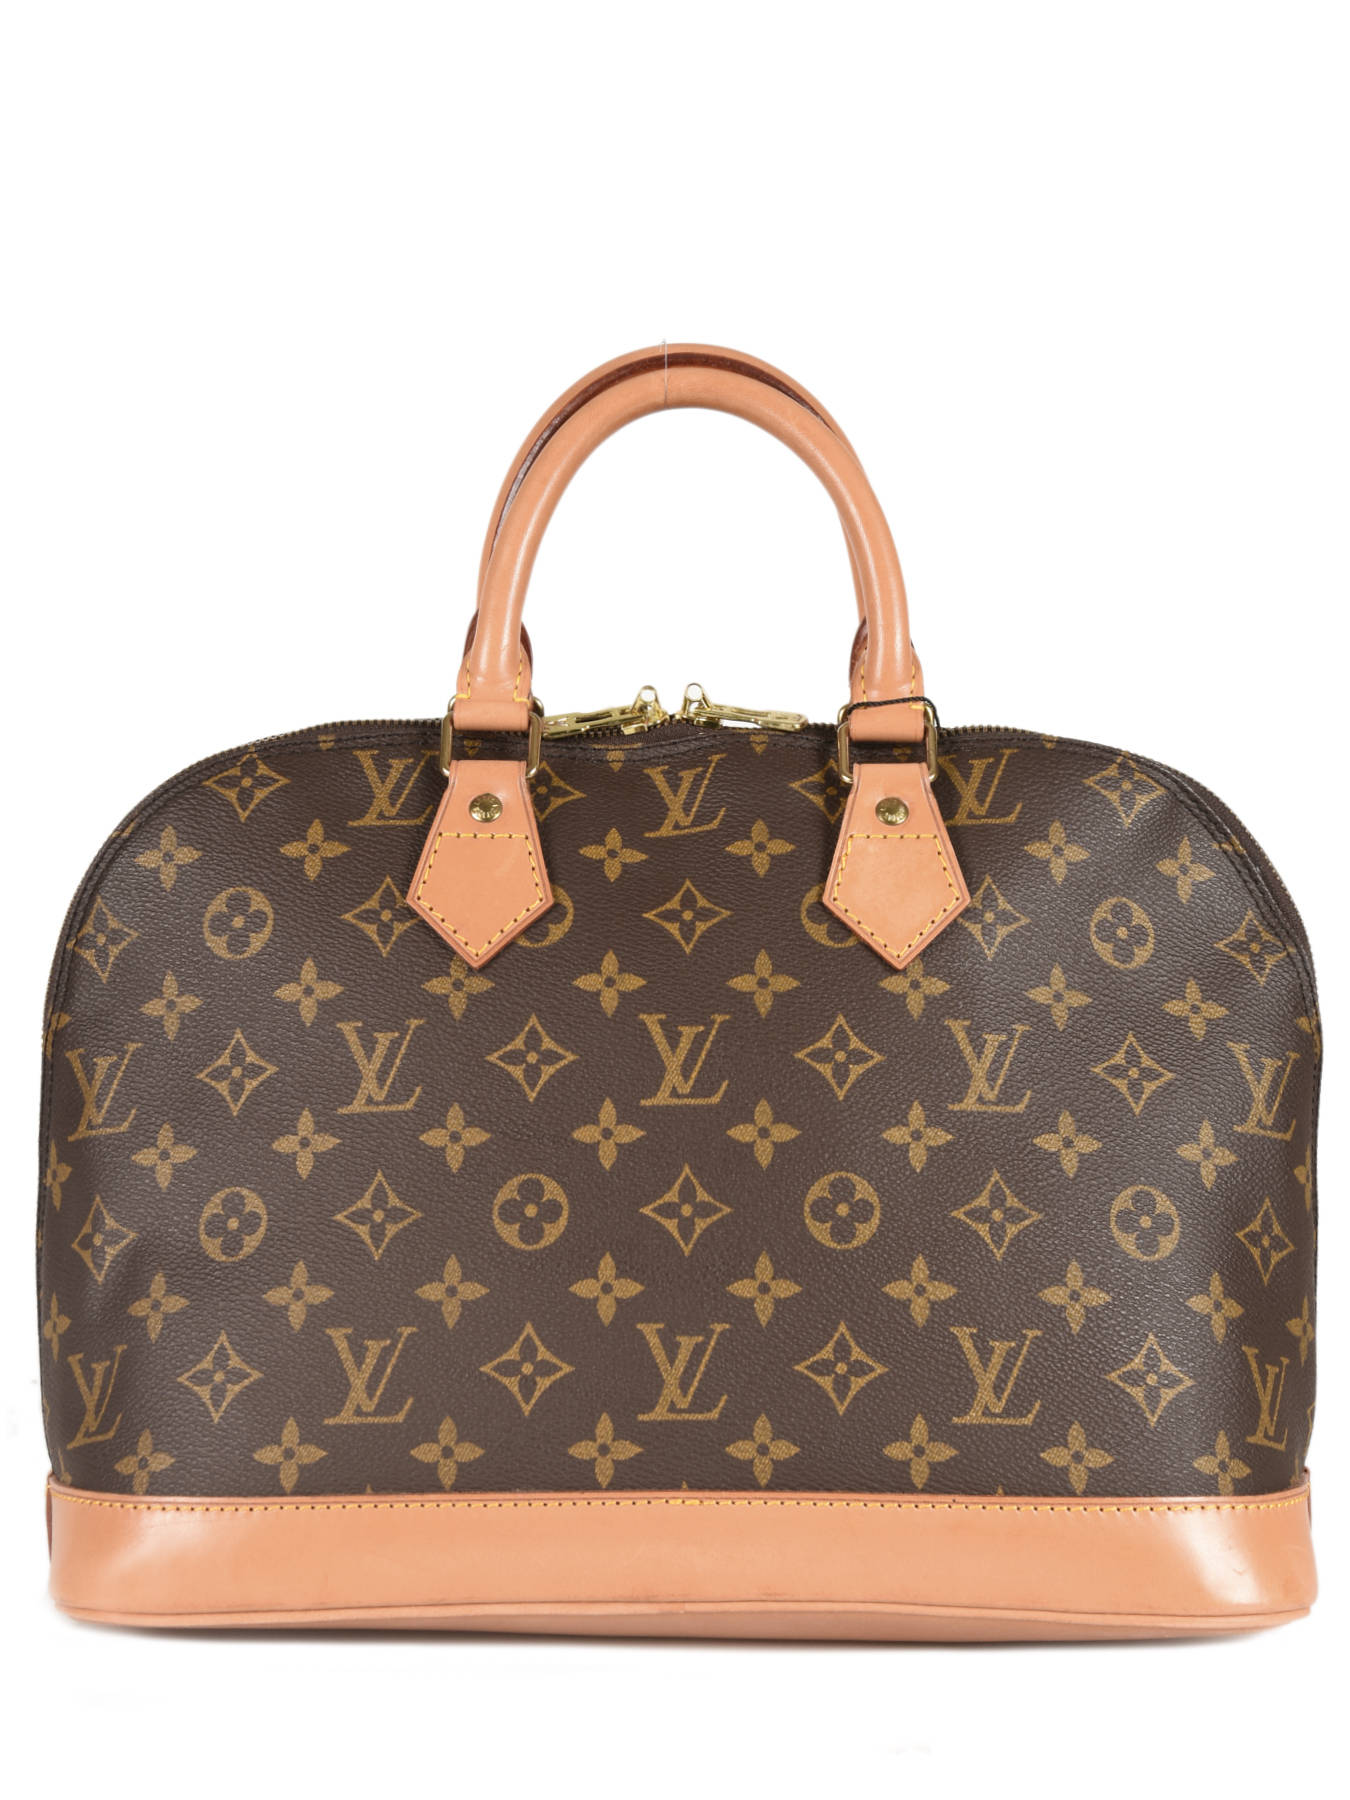 Vintage Louis Vuitton Sac Bandoliere Unsex Satchel/Crossbody Bag. Circa  1980 - pre date code. Heat stamped “Louis Vuitton Paris Made In…